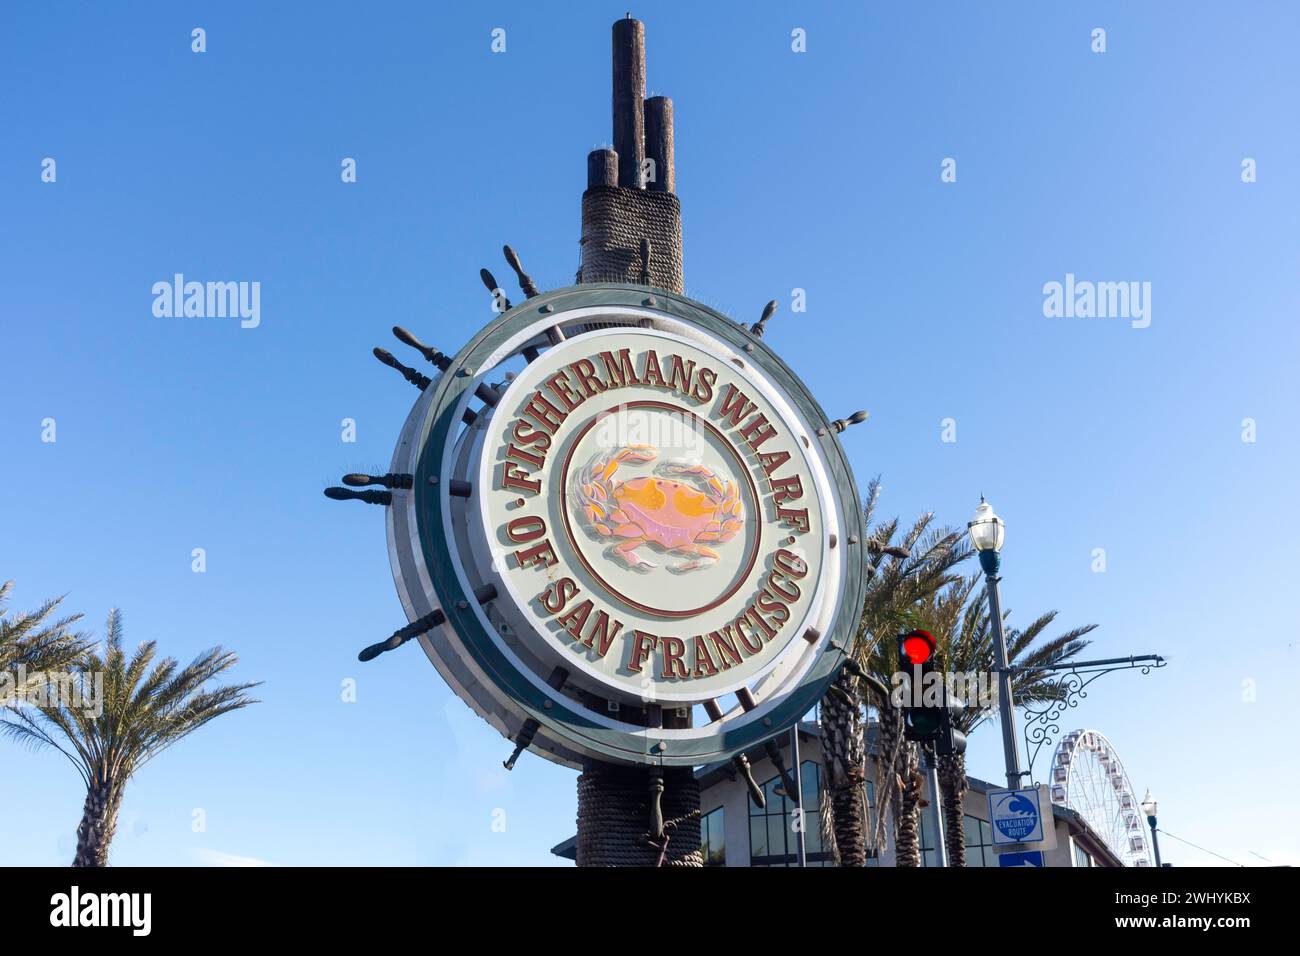 Entrance sign, Fisherman's Wharf, Fisherman's Wharf District, San Francisco, California, United States Stock Photo